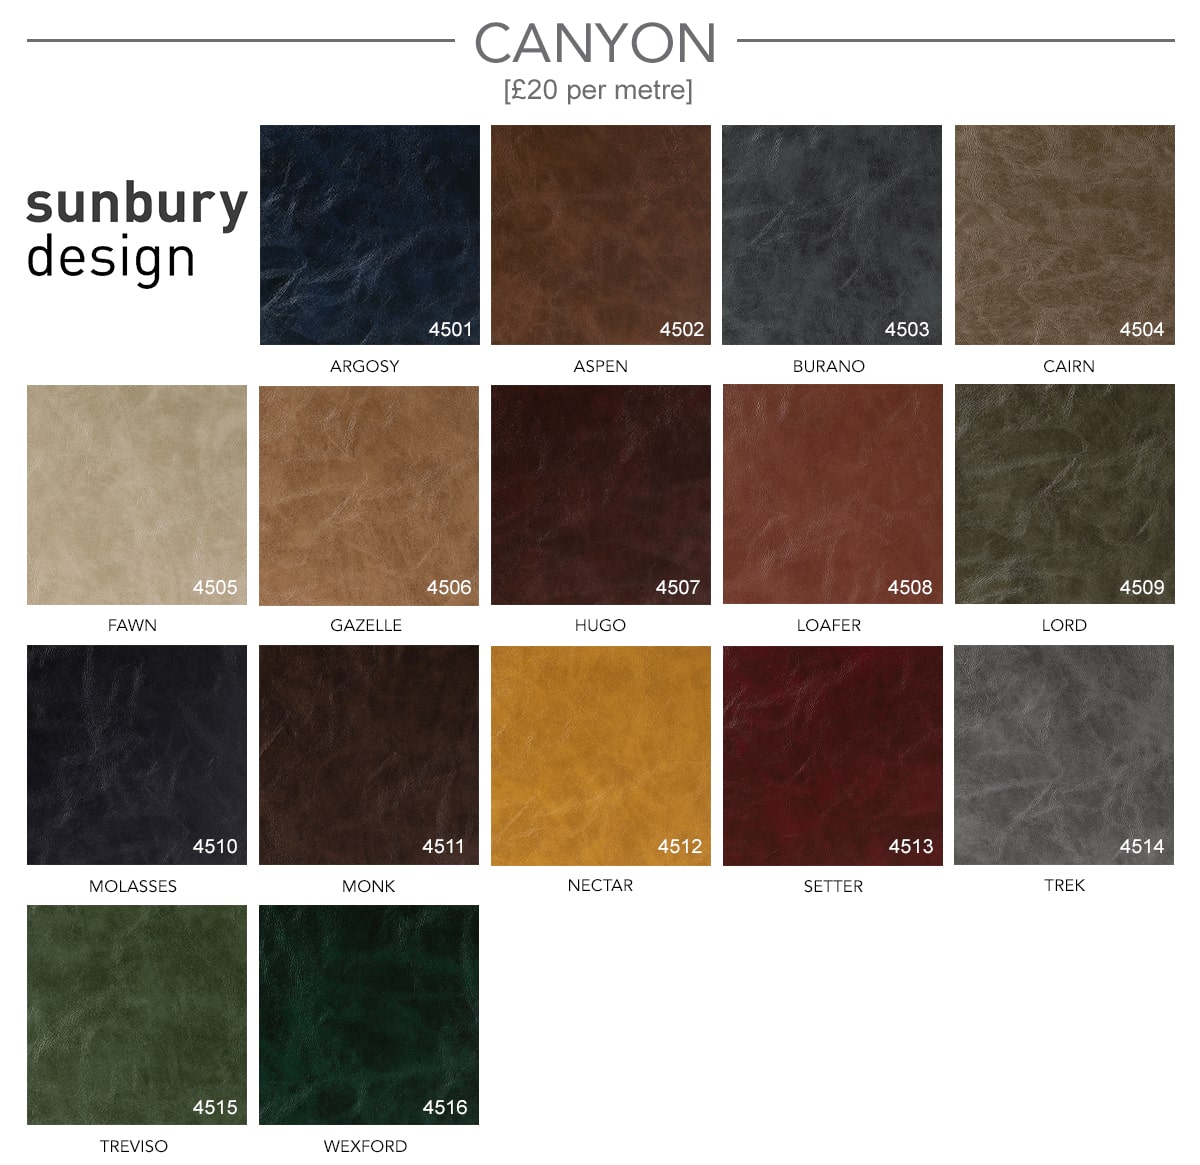 Sunbury_Design_Faux_Leather_Options_-_Canyon.jpg